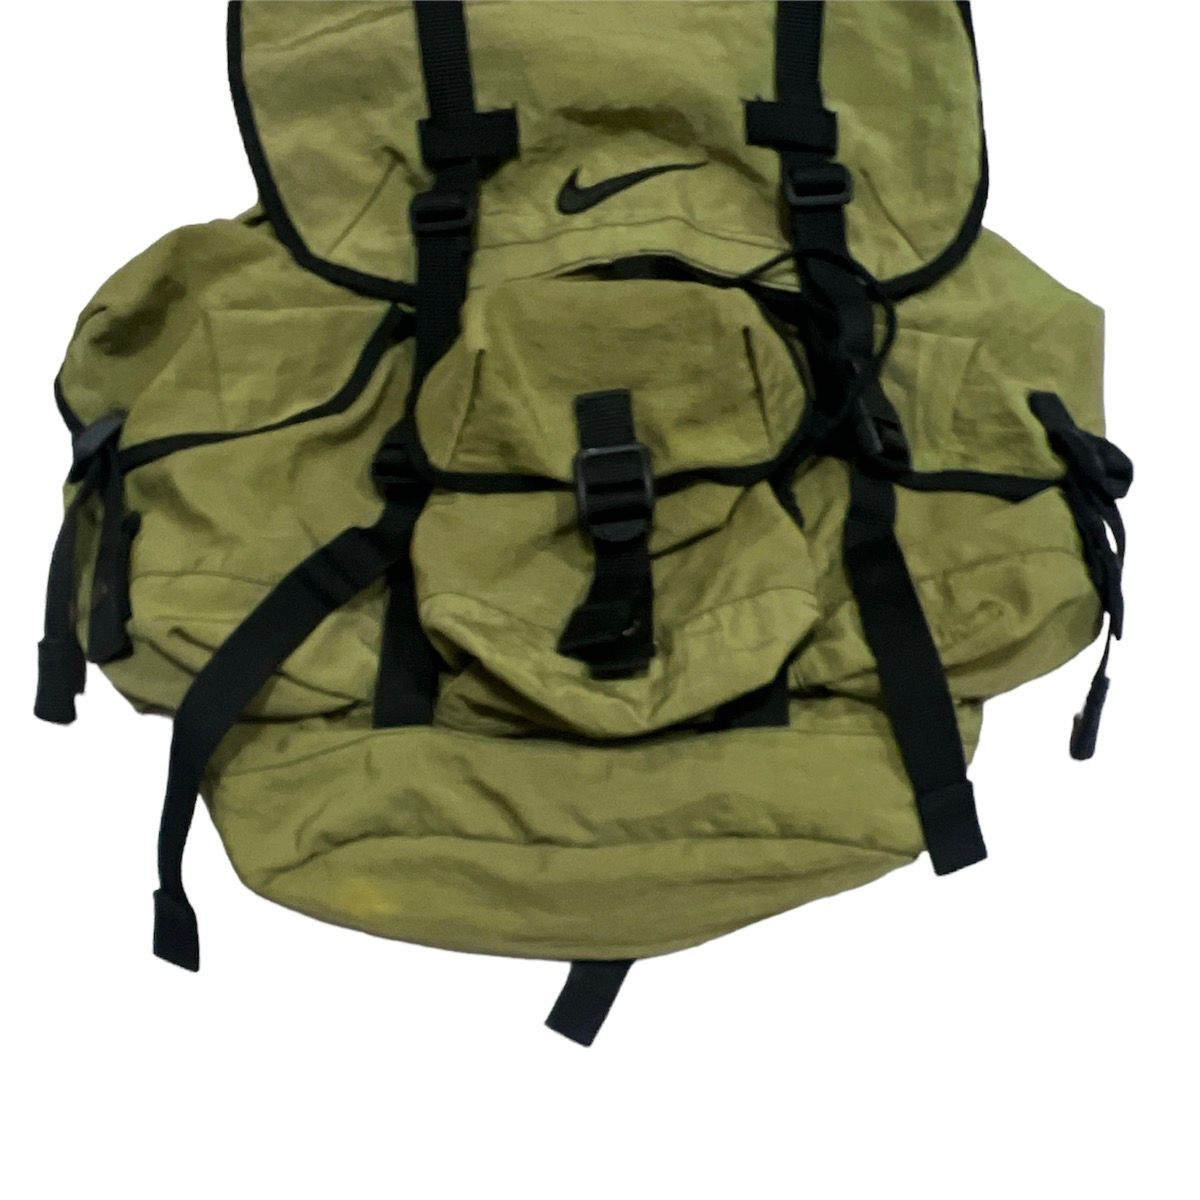 Vintage Nike Nylon Parachute Rucksack Backpack - 3